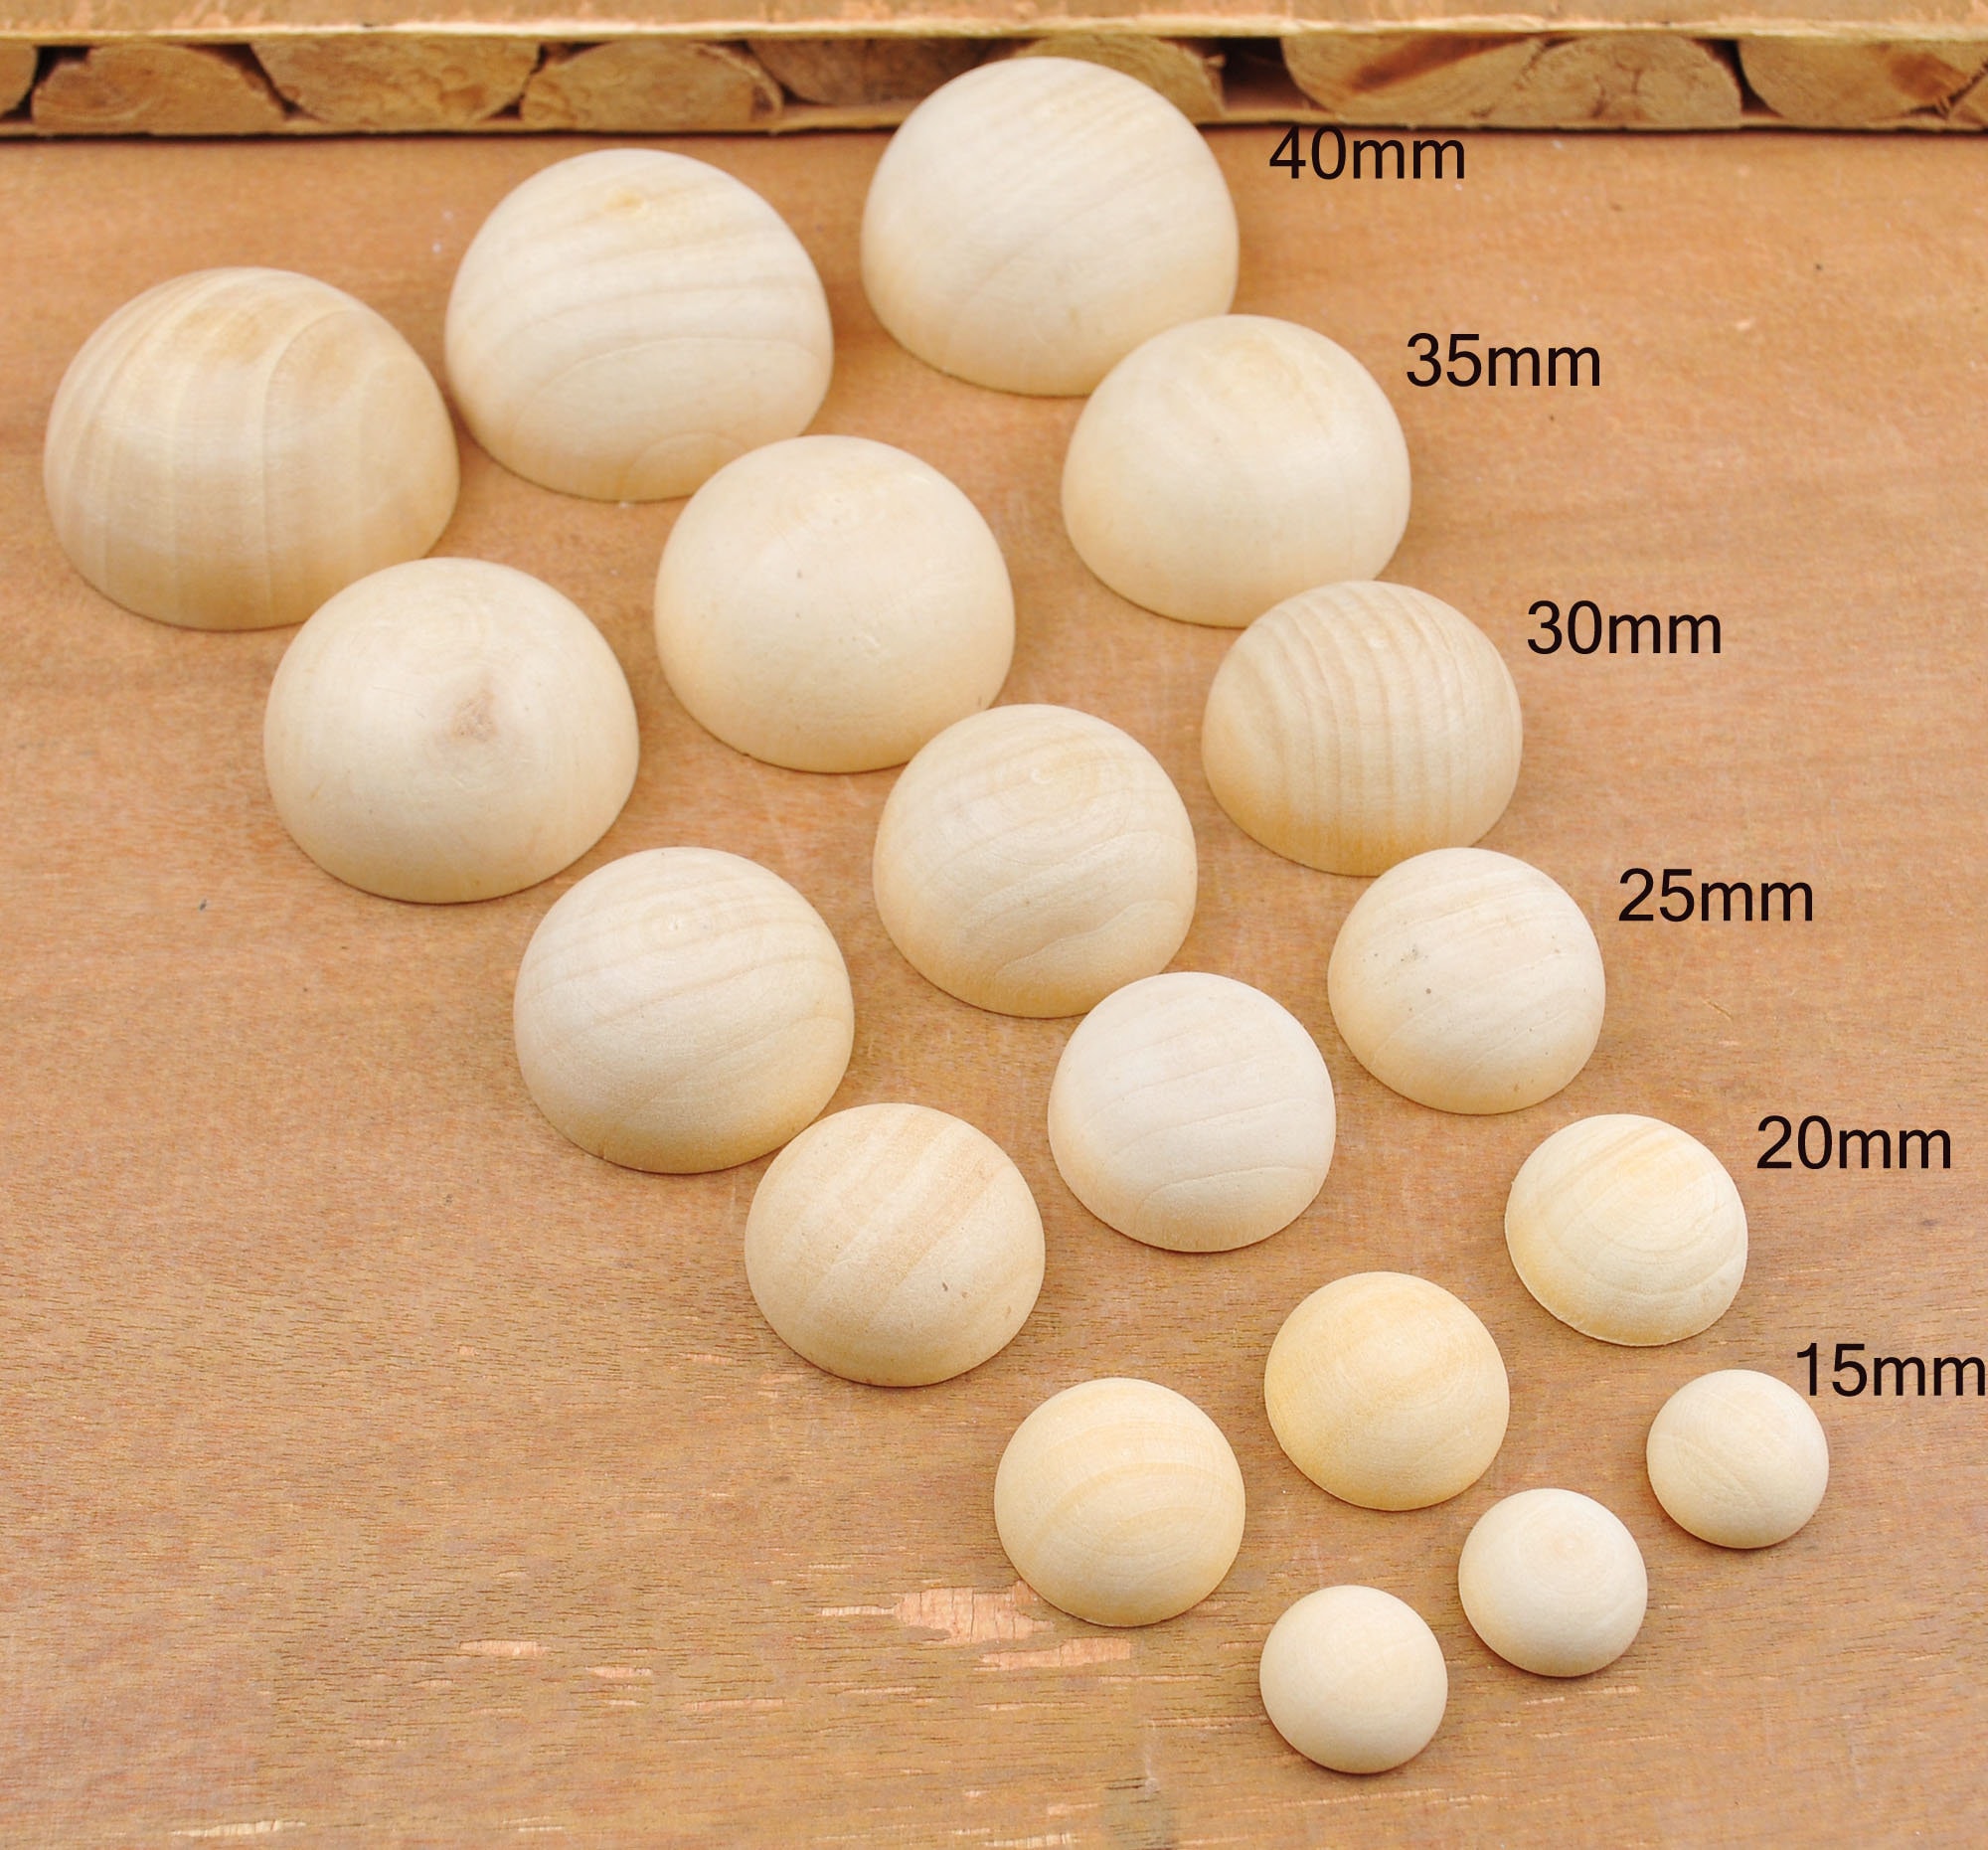 200 Pieces Half Wooden Beads Unfinished Split Wood Balls Half